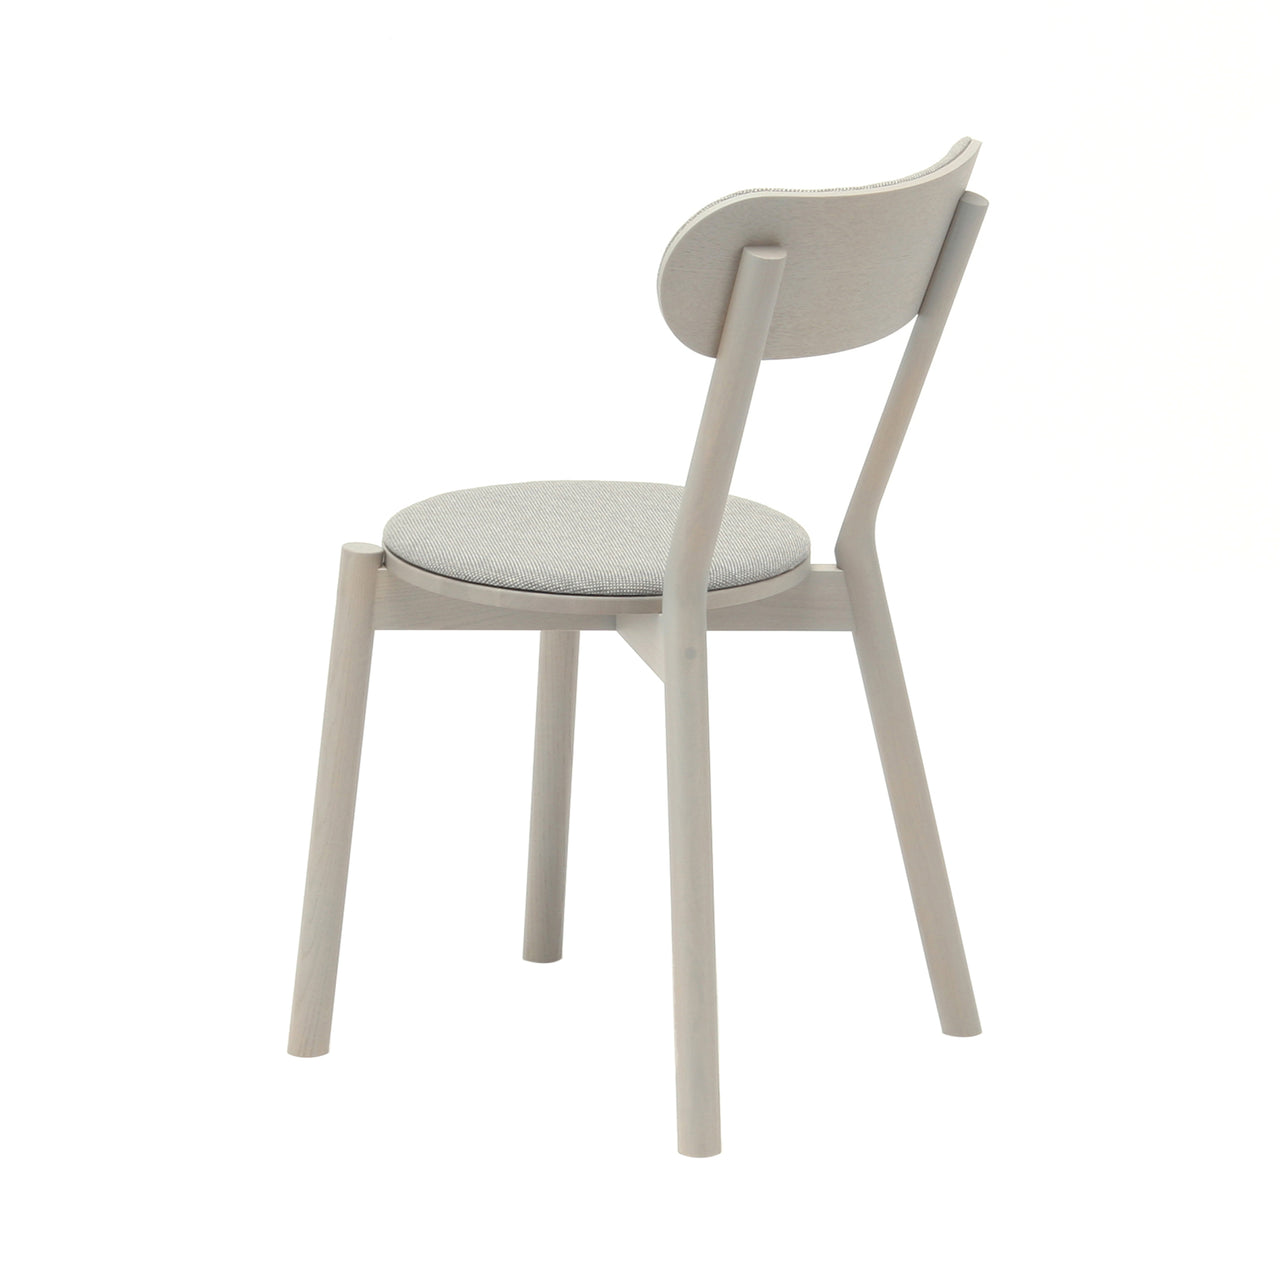 Castor Chair Pad: Grain Grey + Grey Pad